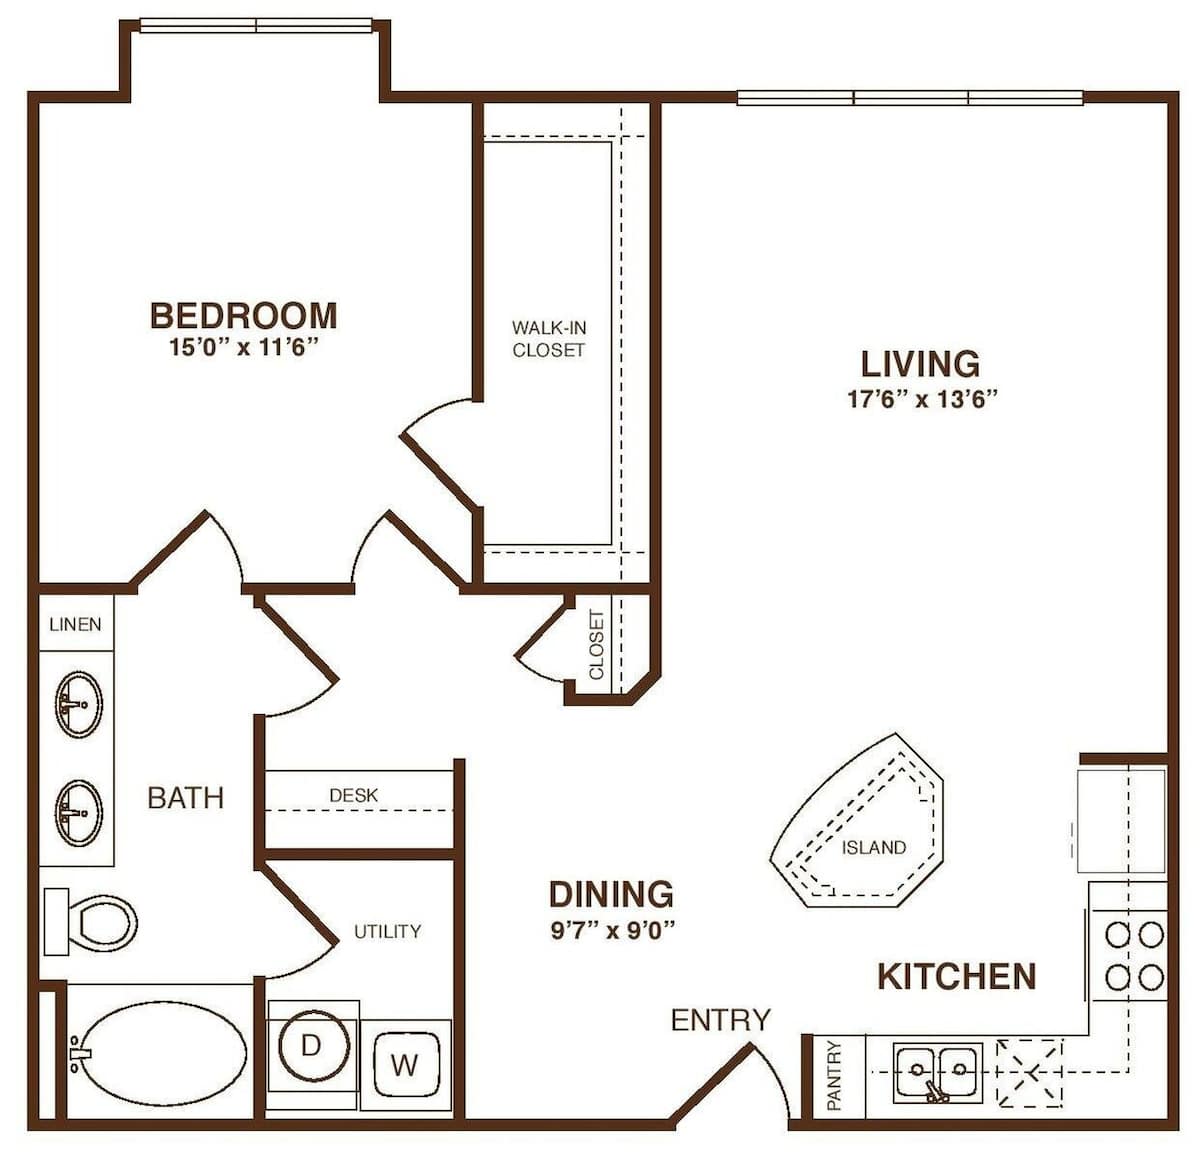 Floorplan diagram for The Bristol, showing 1 bedroom